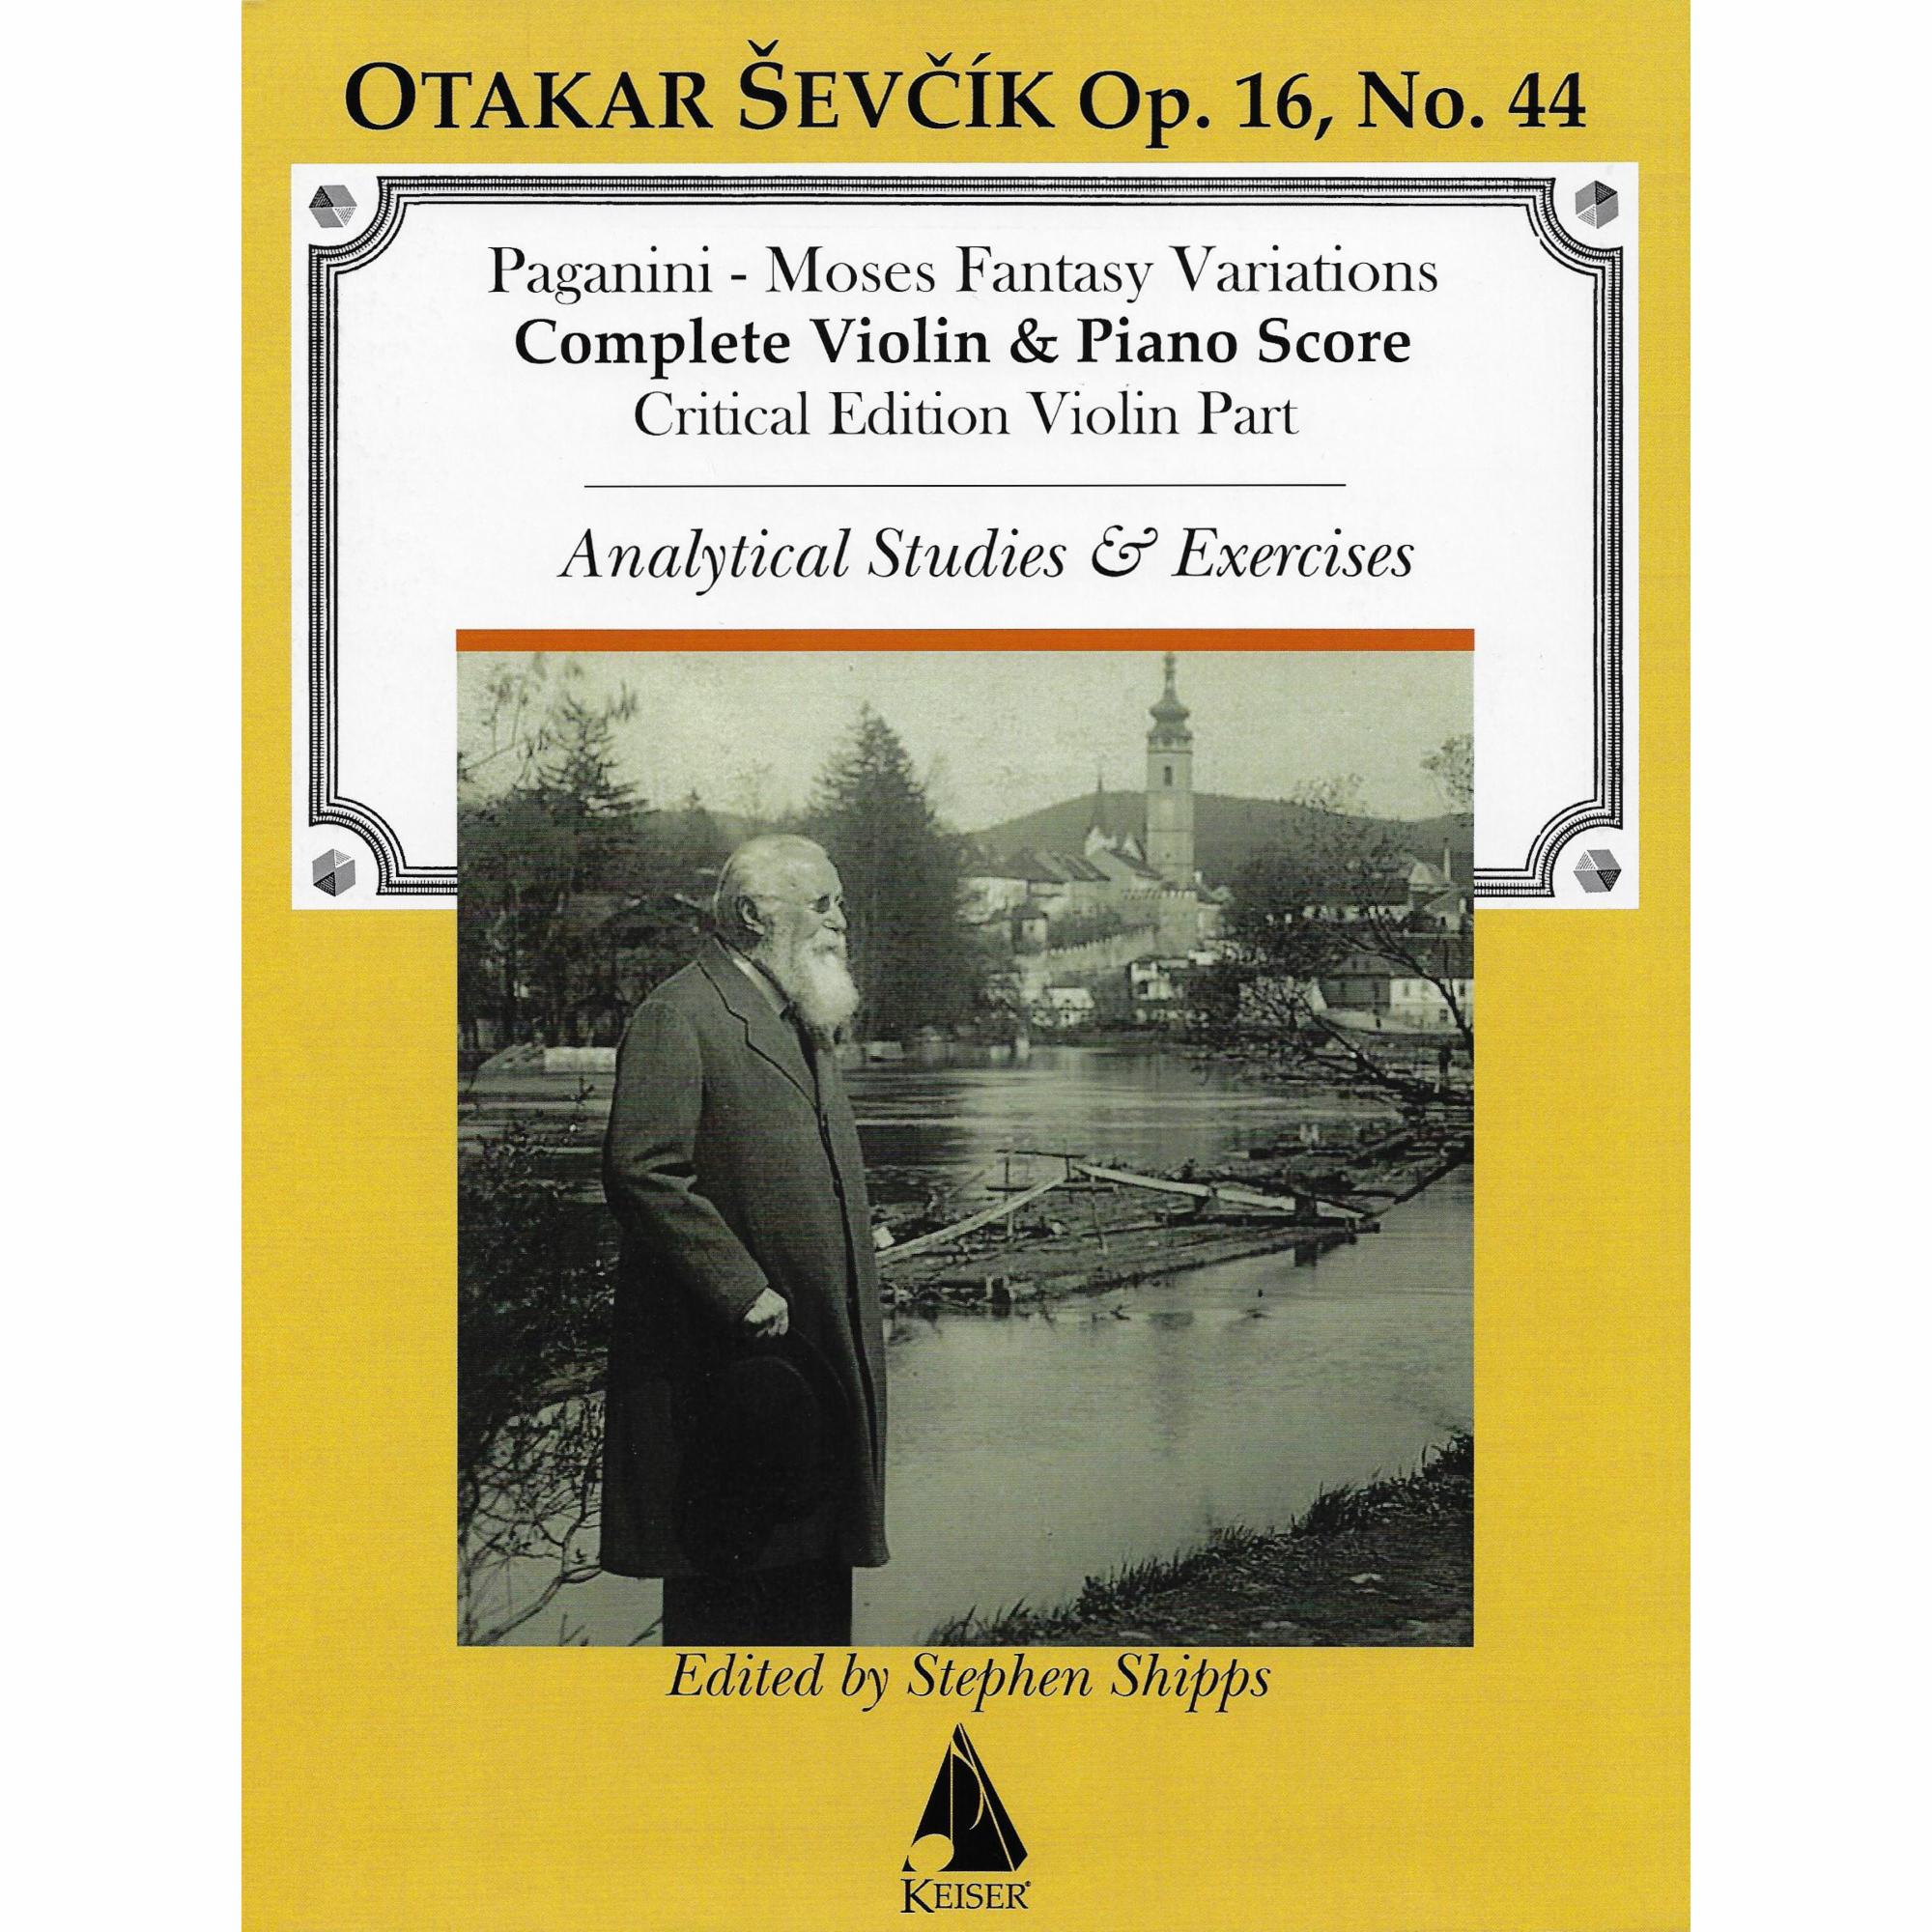 Sevcik -- Analytical Studies & Exercises, Op. 16, No. 44 (after Paganini Moses Fantasy Variations)